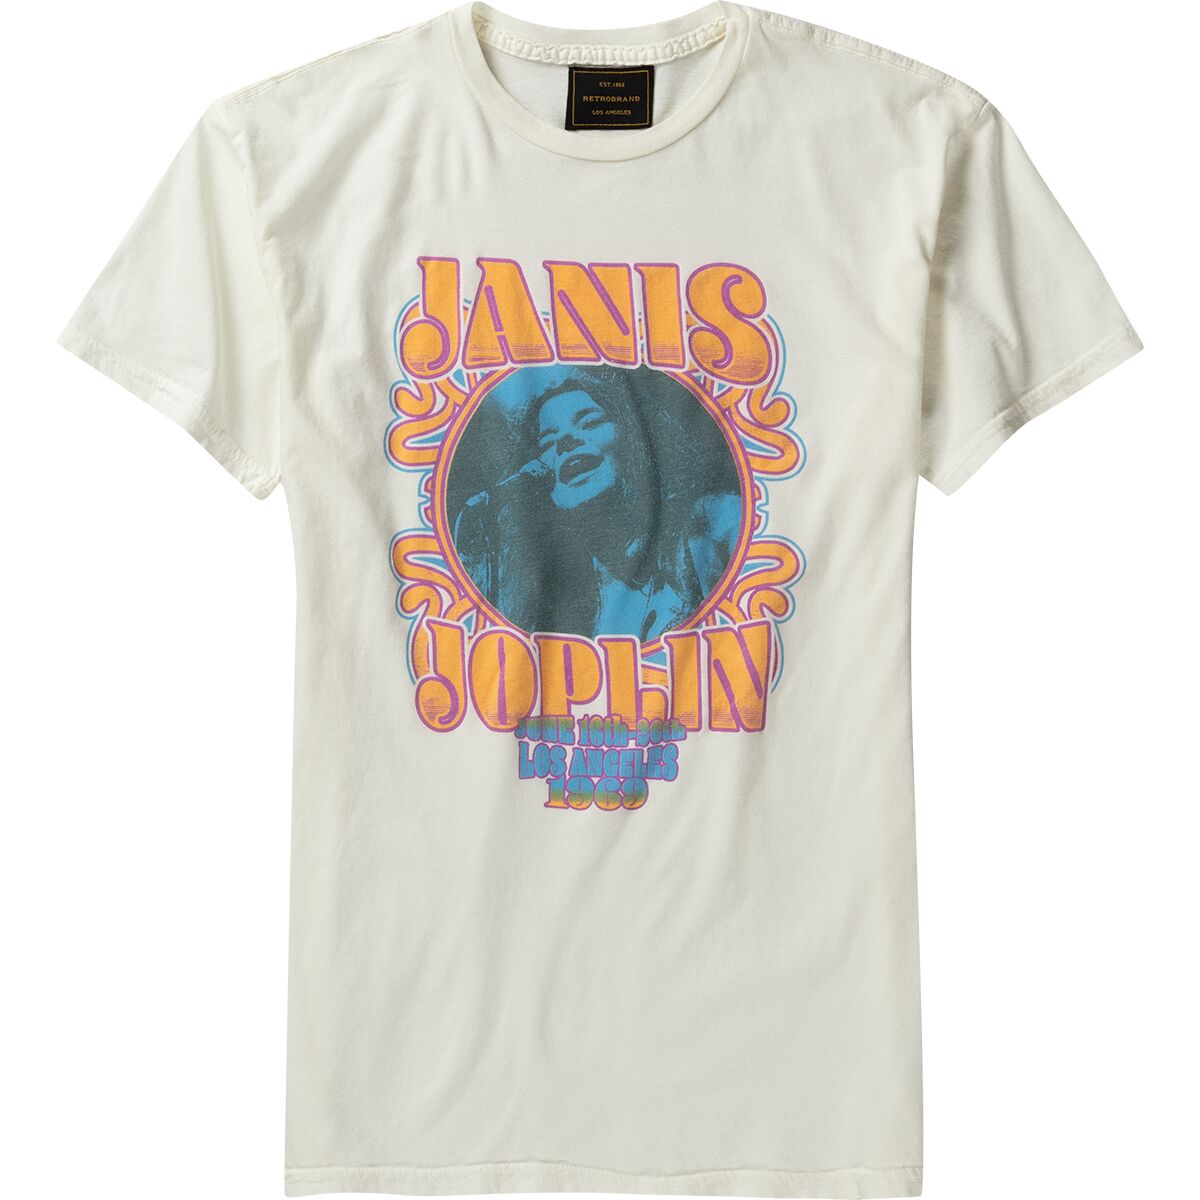 Original Retro Brand Janis Joplin T-Shirt - Women's